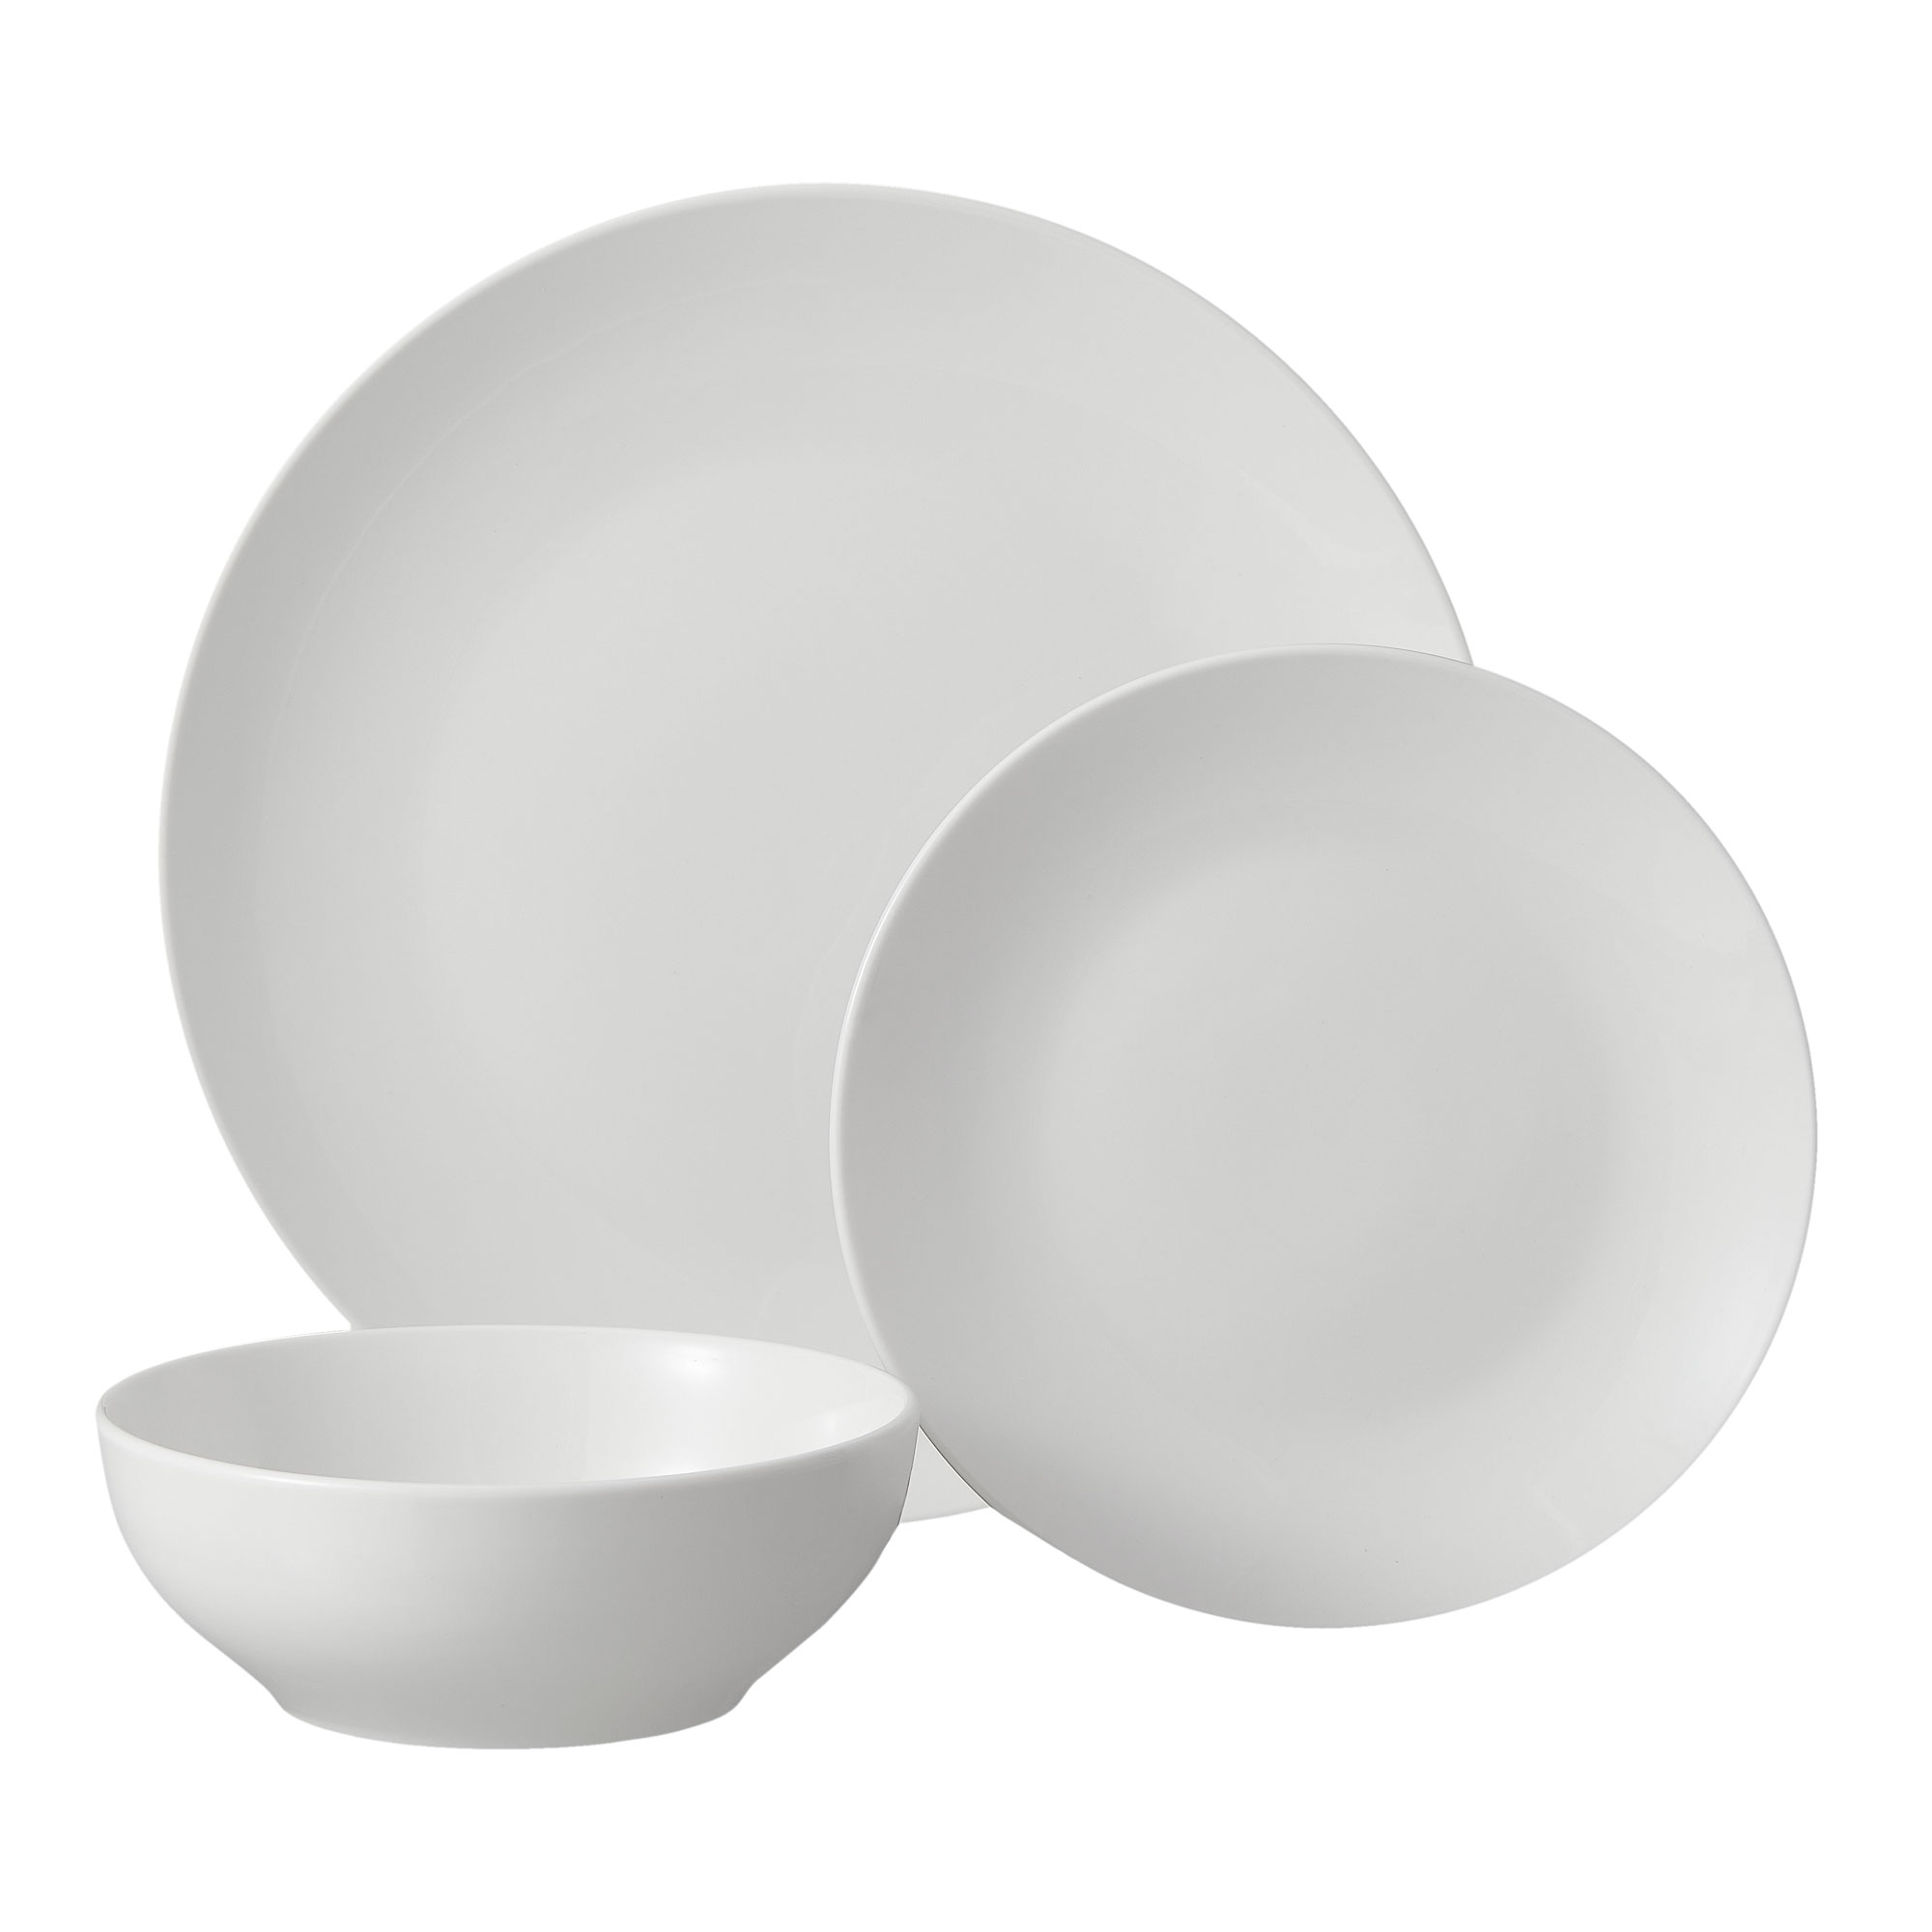 Mainstays Glazed White Stoneware Dinnerware Set, 12-Pieces - image 1 of 12